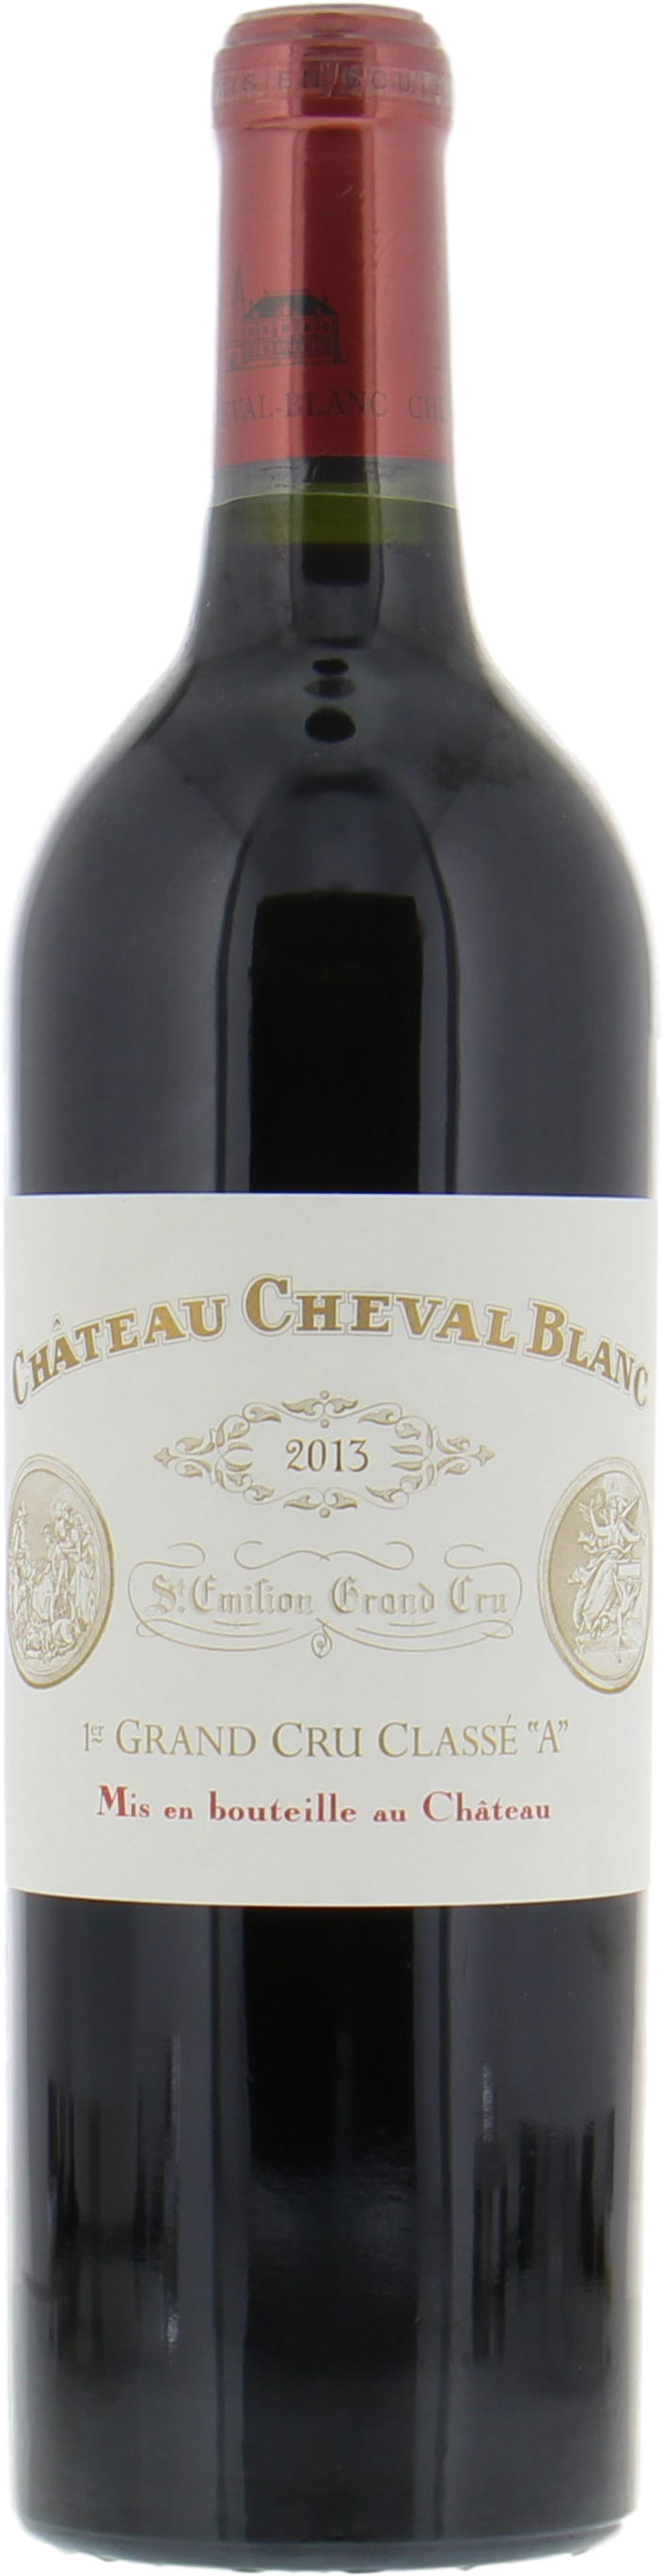 Chateau Cheval Blanc - Chateau Cheval Blanc 2013 Perfect